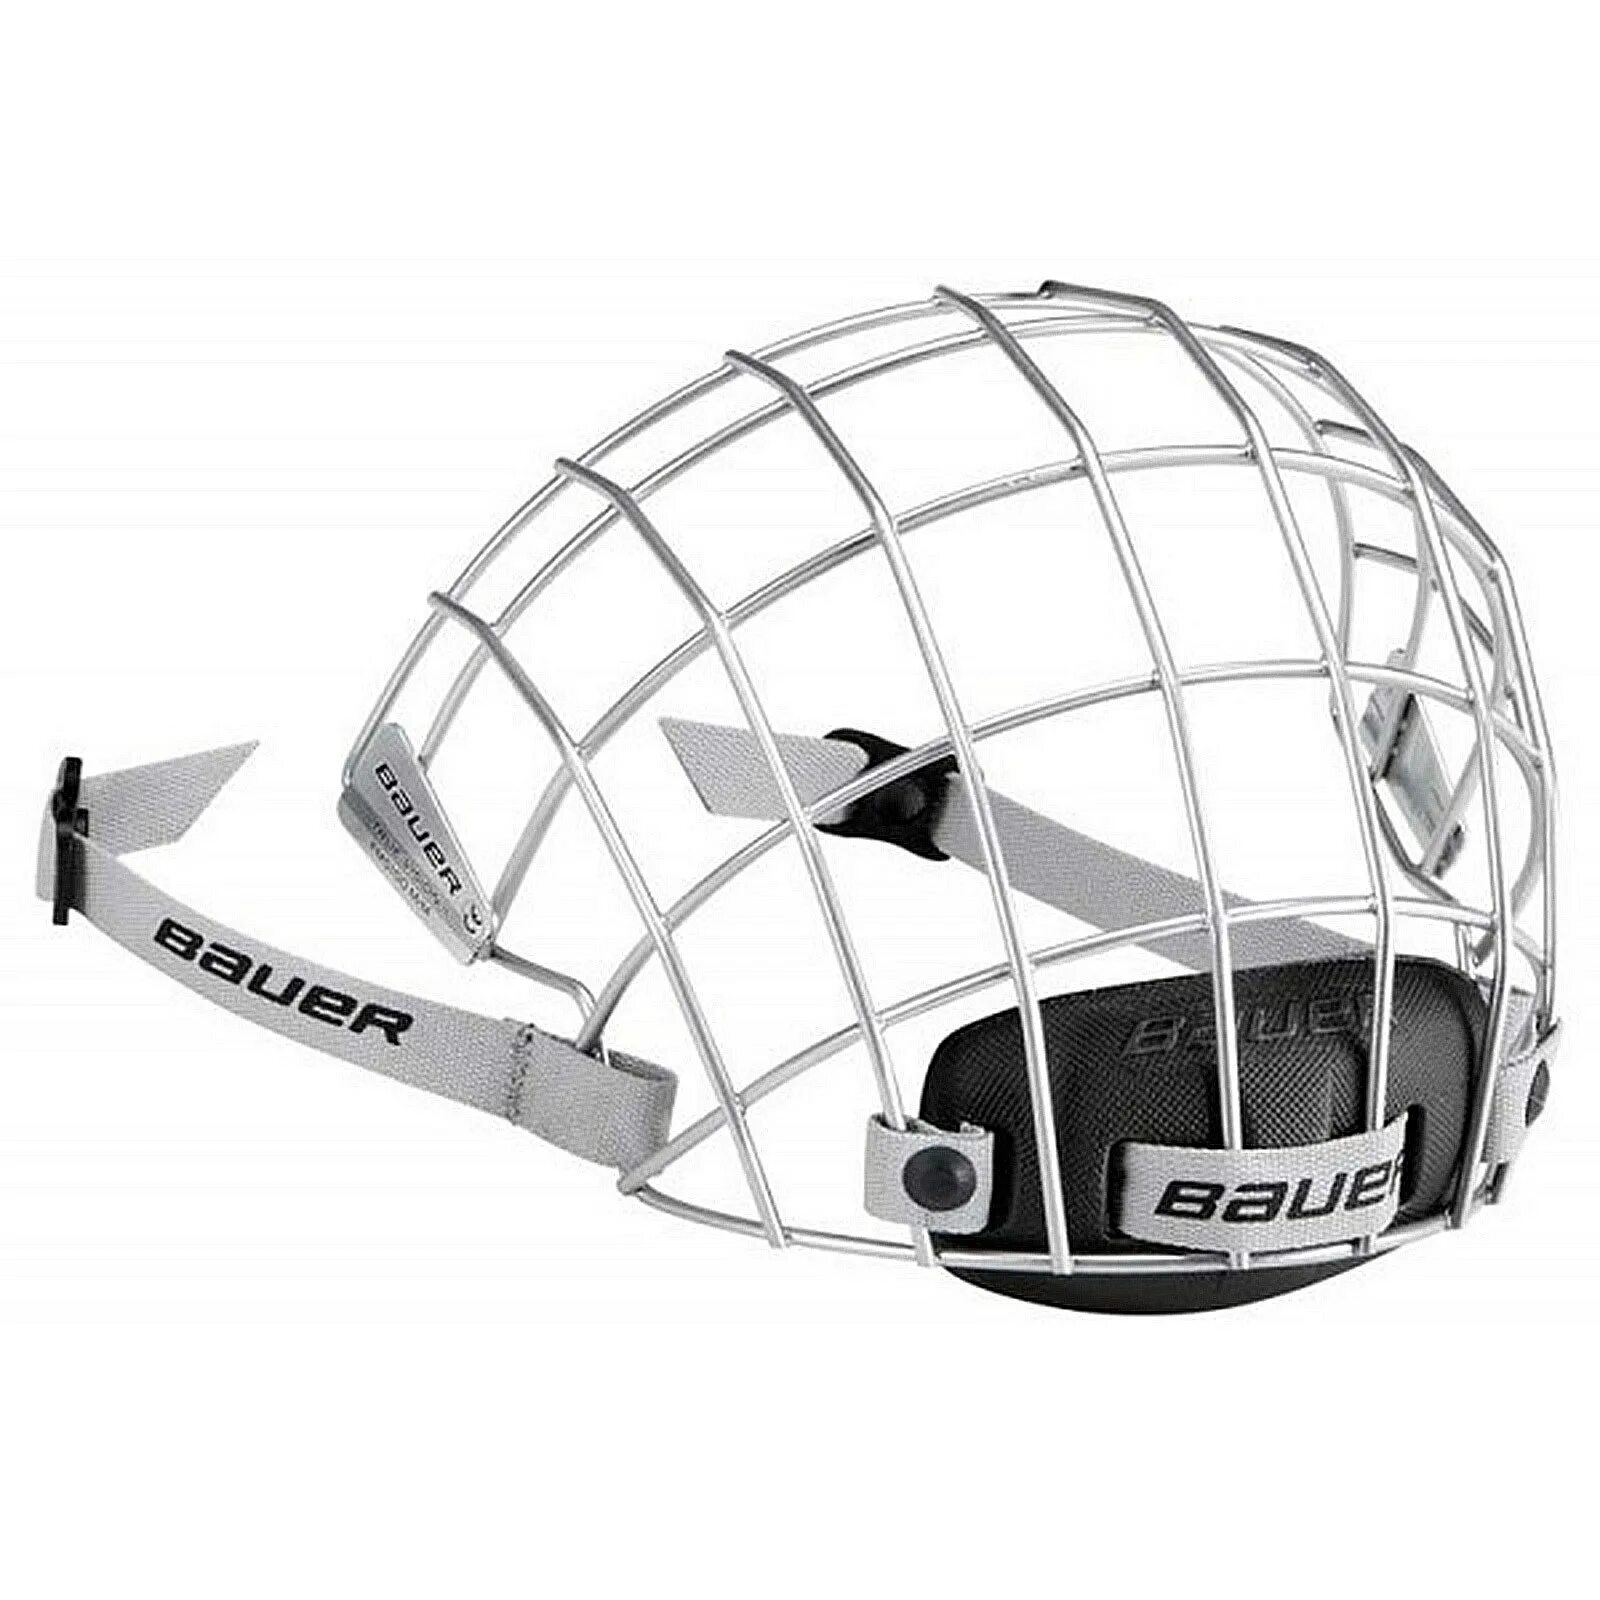 Маска визор Бауэр. Маска для шлема Bauer 2100 Facemask SR. Хоккейный шлем Bauer 5100. Хоккейная маска Бауэр.